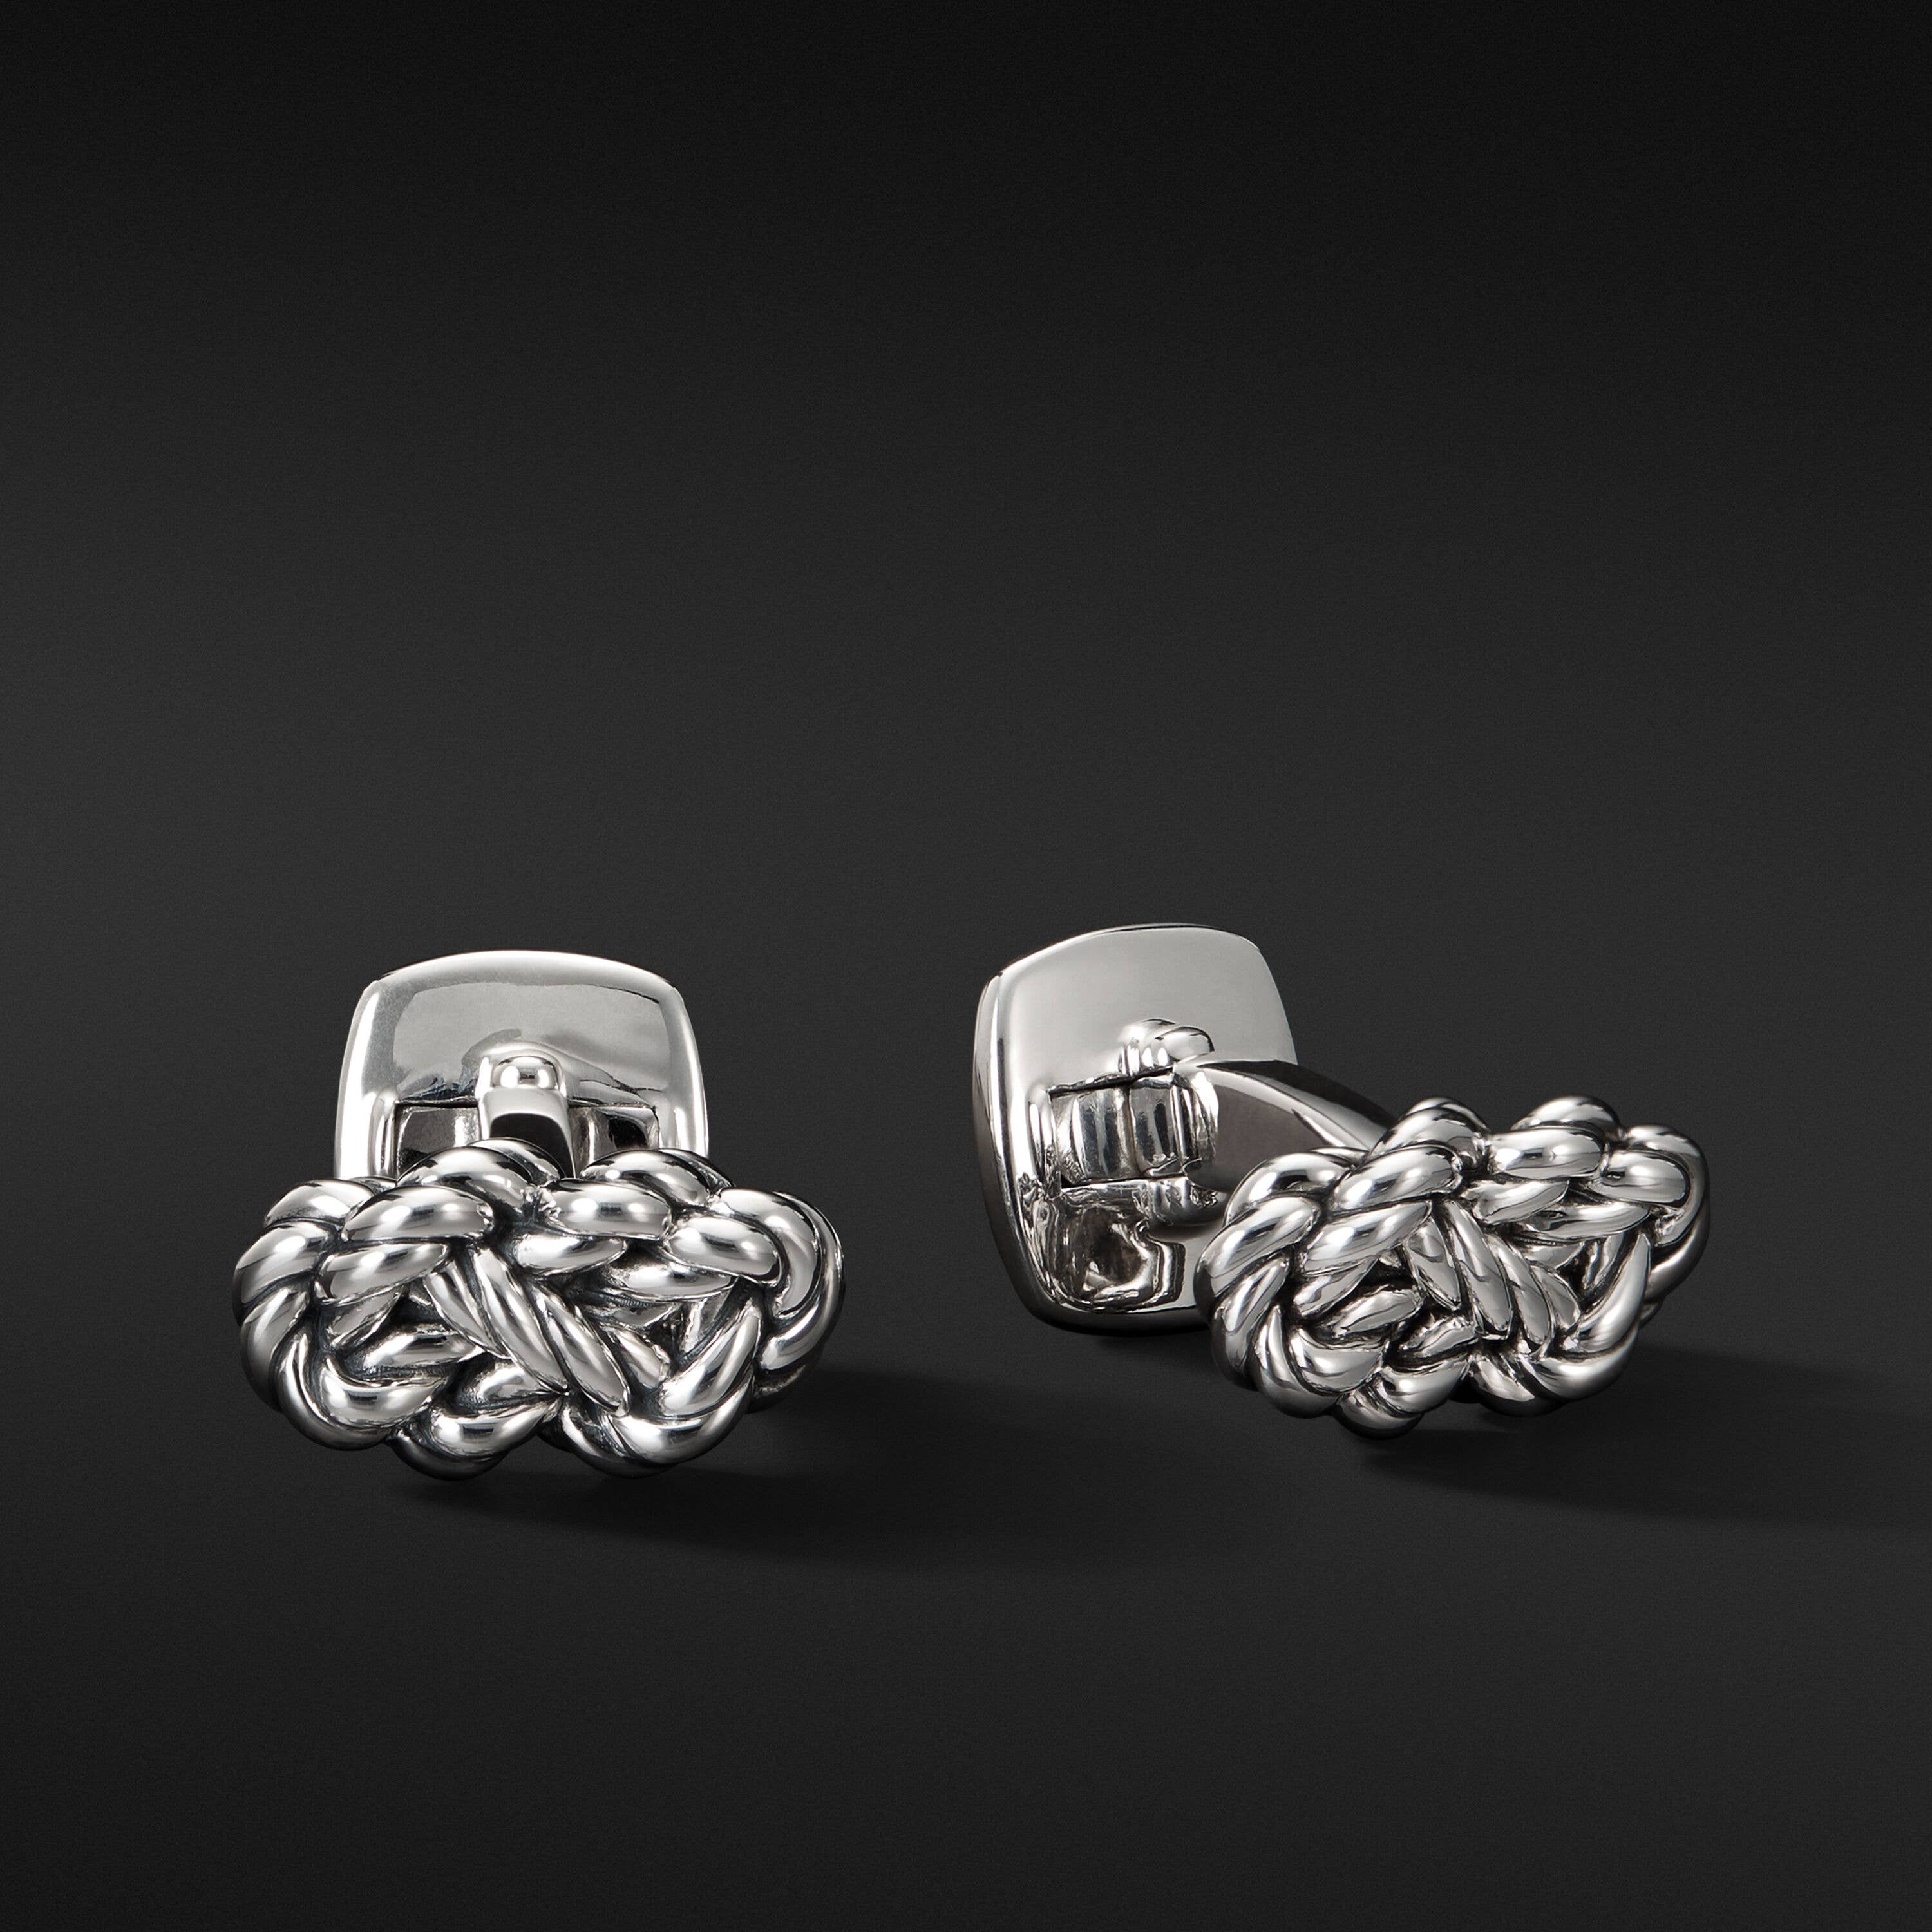 Maritime® Knot Cufflinks in Sterling Silver